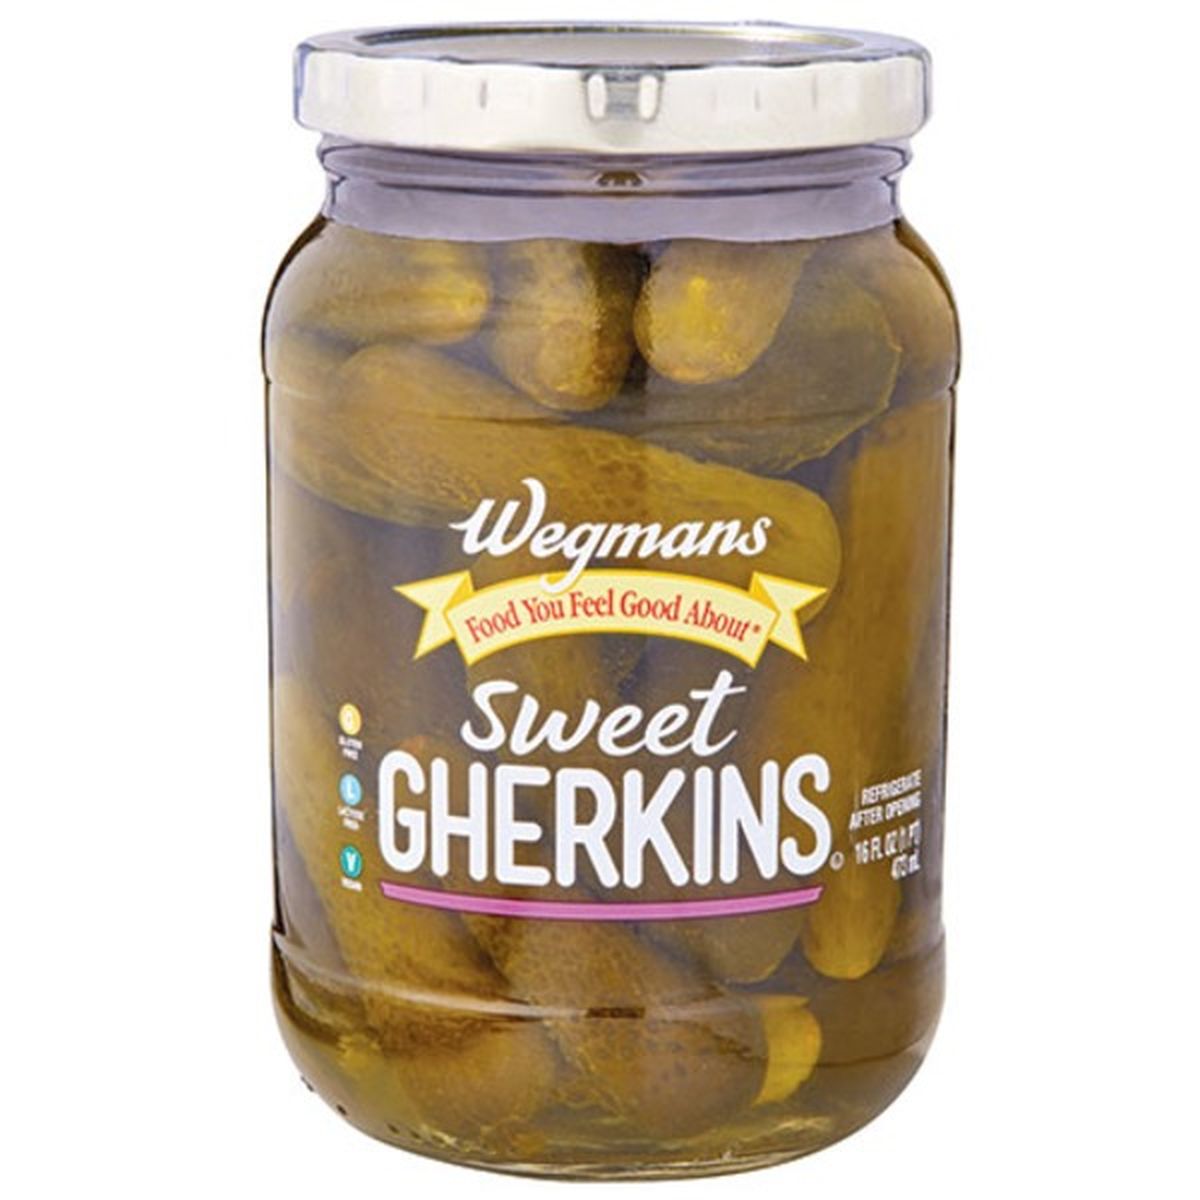 Calories in Wegmans Sweet Gherkins